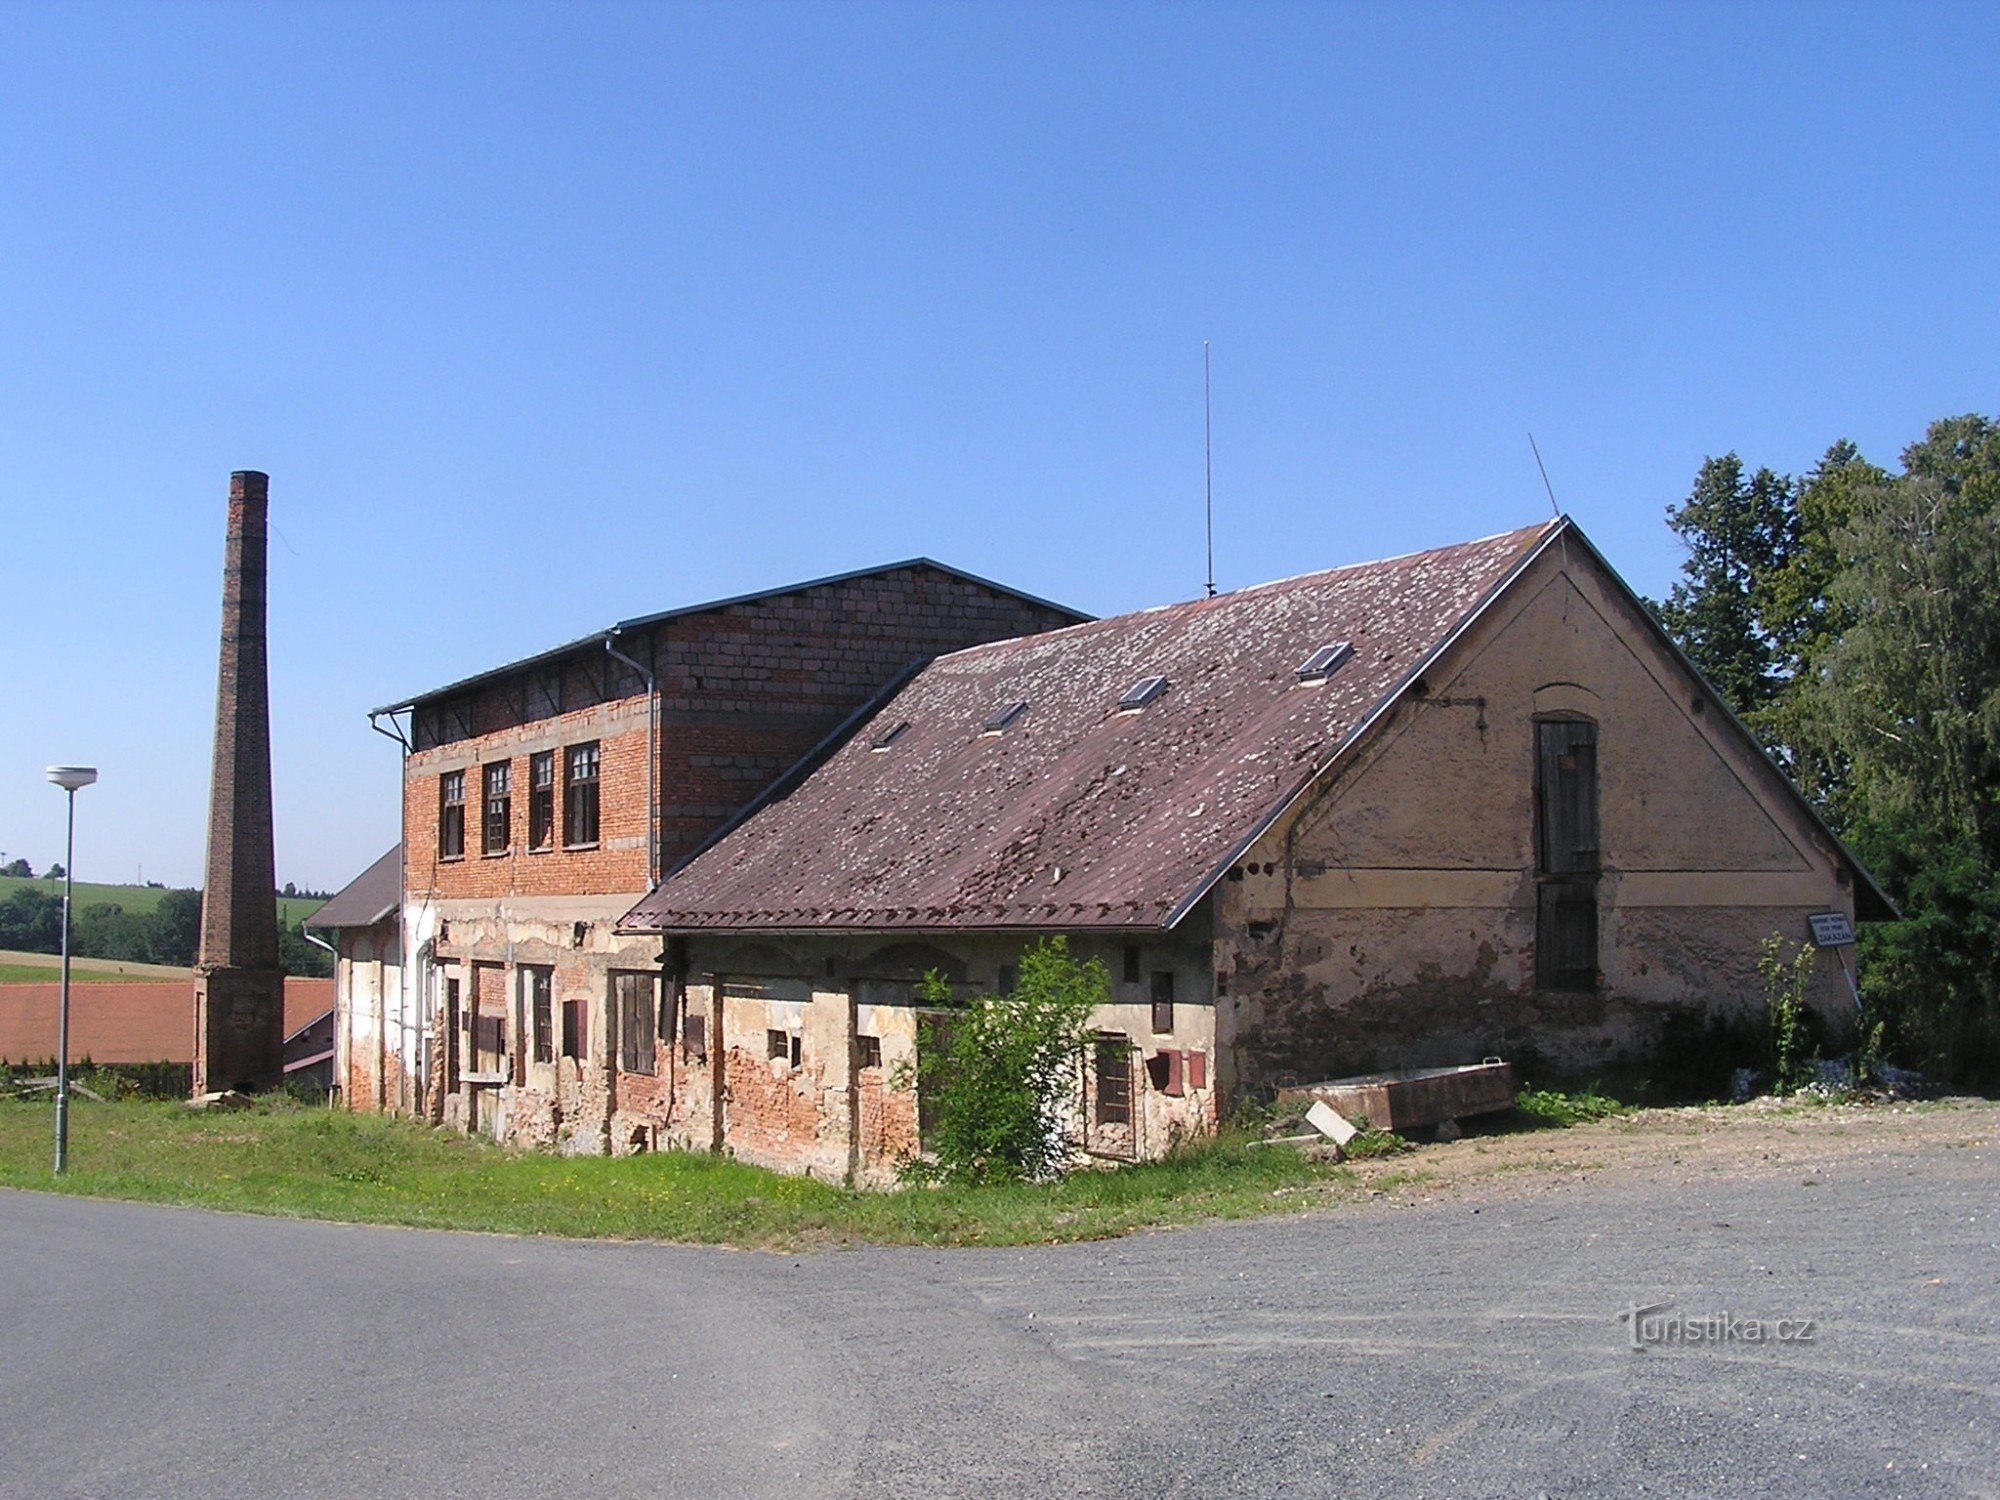 Forteresse de Zbraslavice - bâtiments de ferme - 7.8.2008 août XNUMX